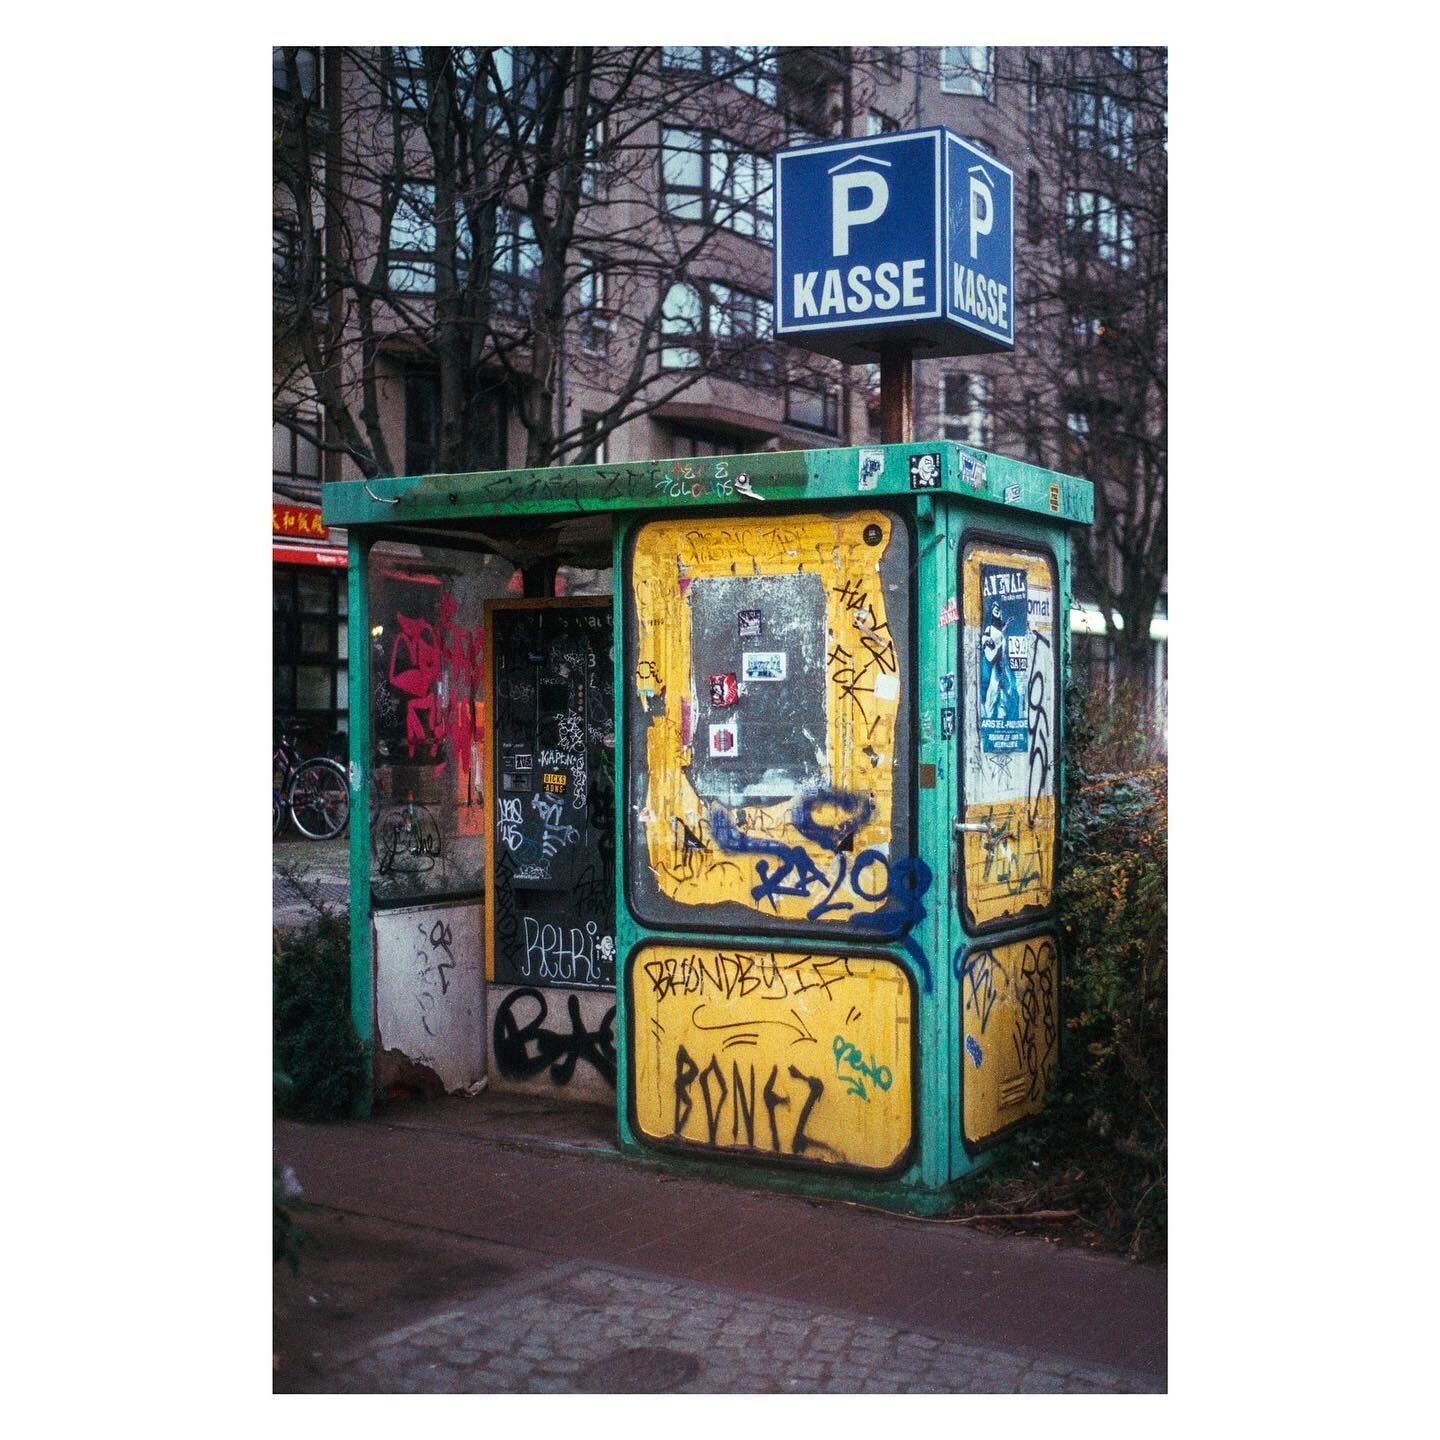 Kasse

#NikonFE #analog #35mm #onfilm #filmphotography #spiegelreflex #analogfotografie #berlin #kassenautomat